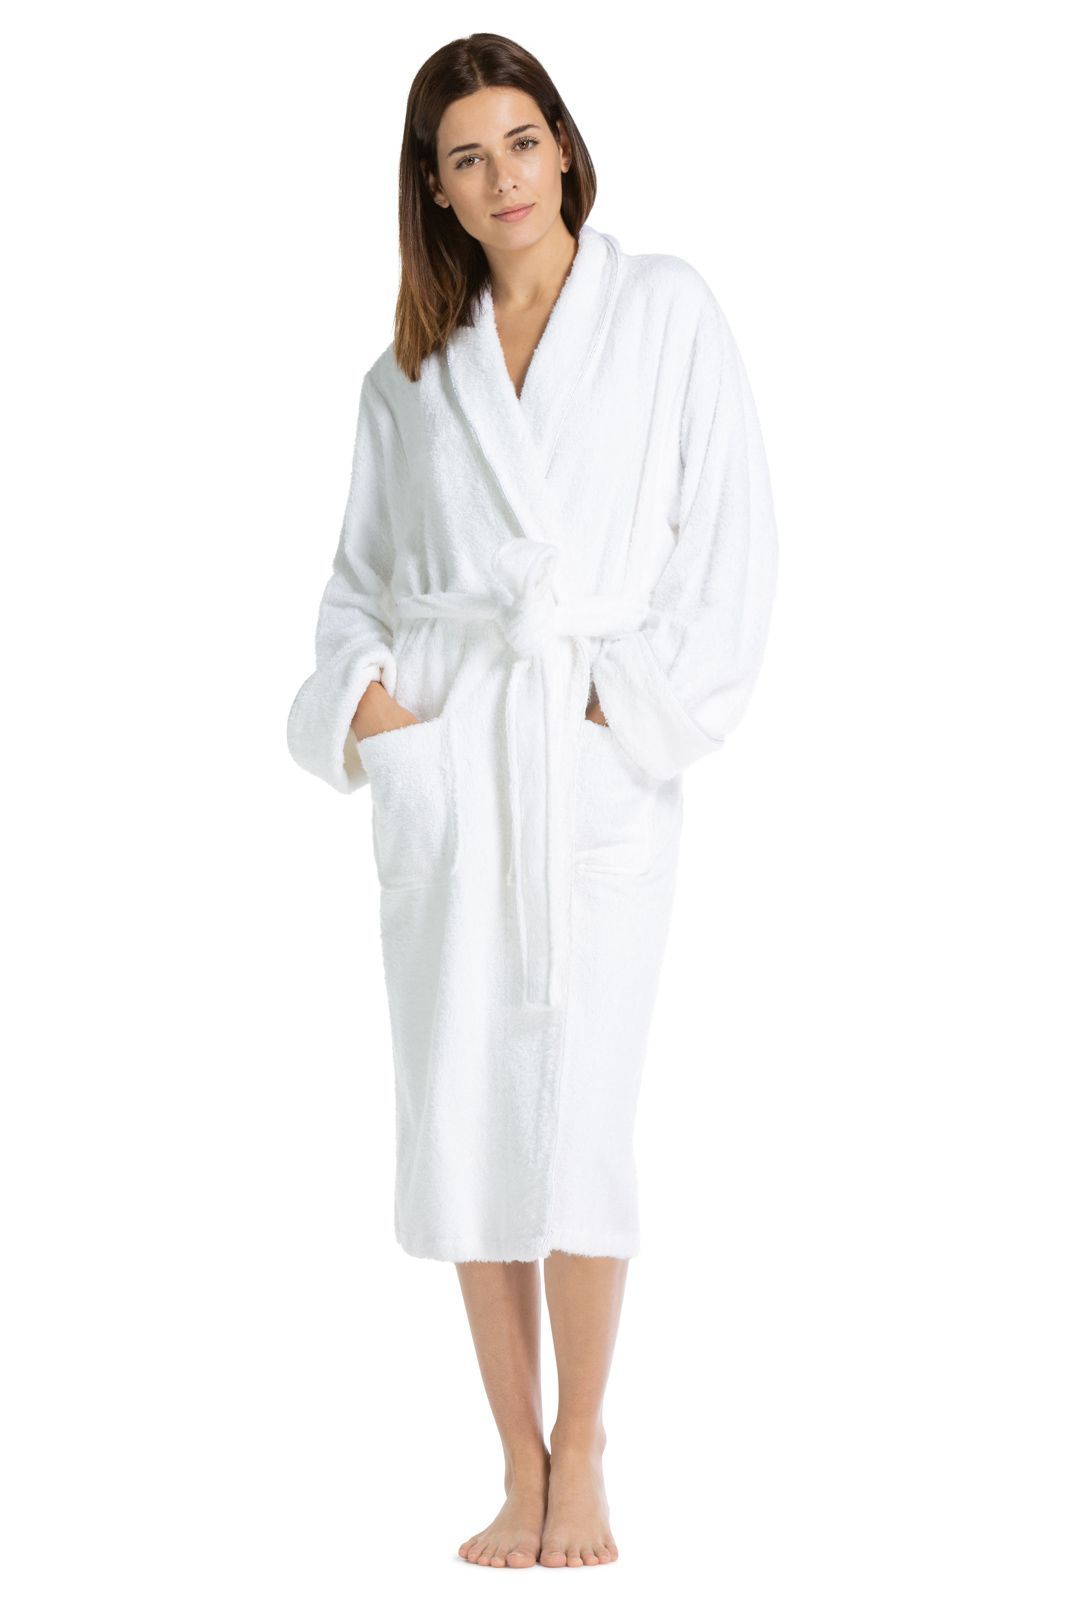 TowelSelections Men's Cotton Robe, Terry Cloth Luxury Spa Bathrobe